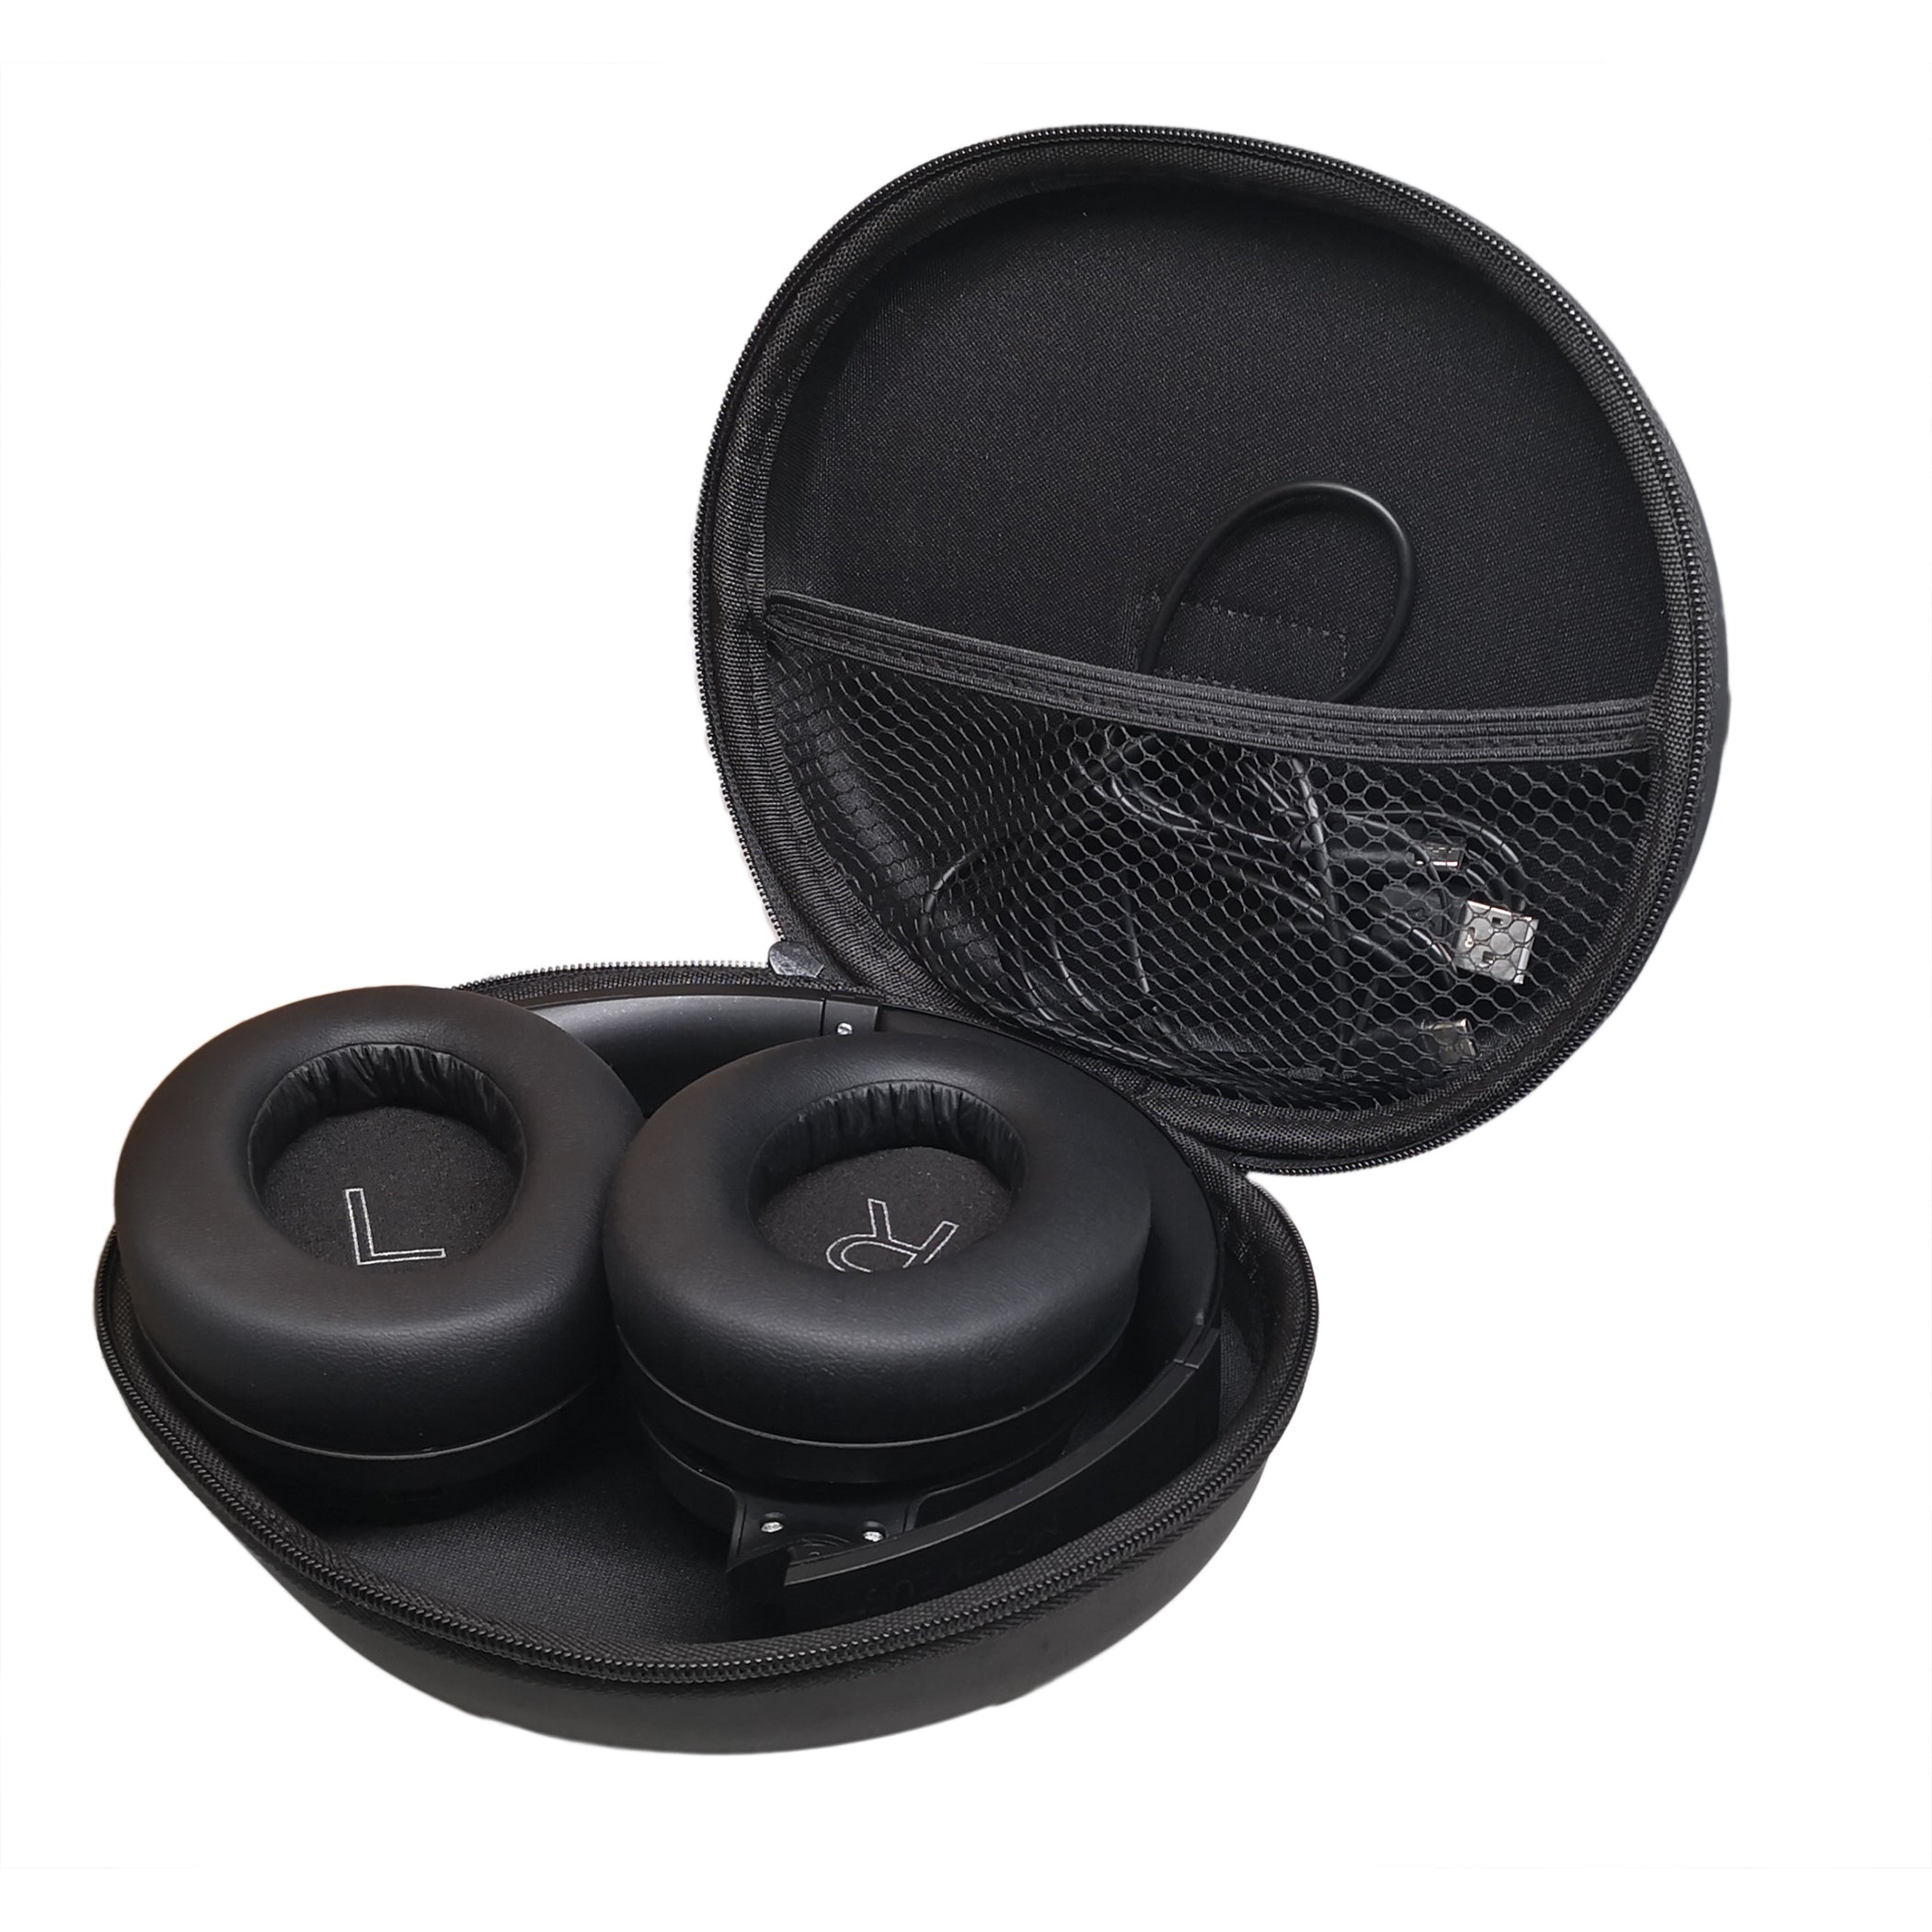 Morpheus 360 Krave HD Wireless Over Ear Headphones - Bluetooth